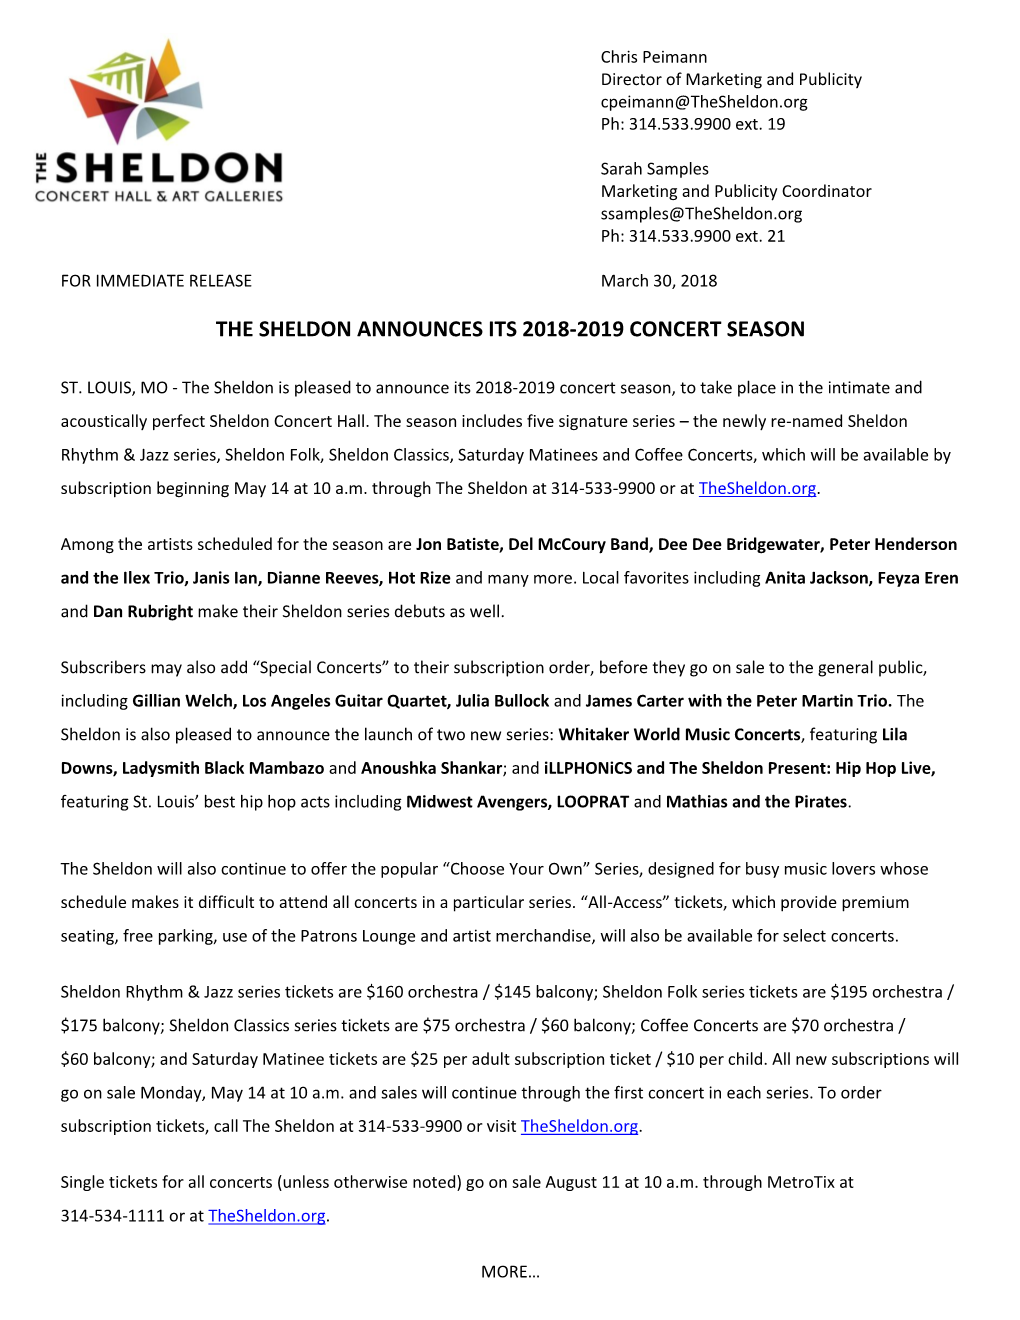 The Sheldon Announces Its 2018-2019 Concert Season